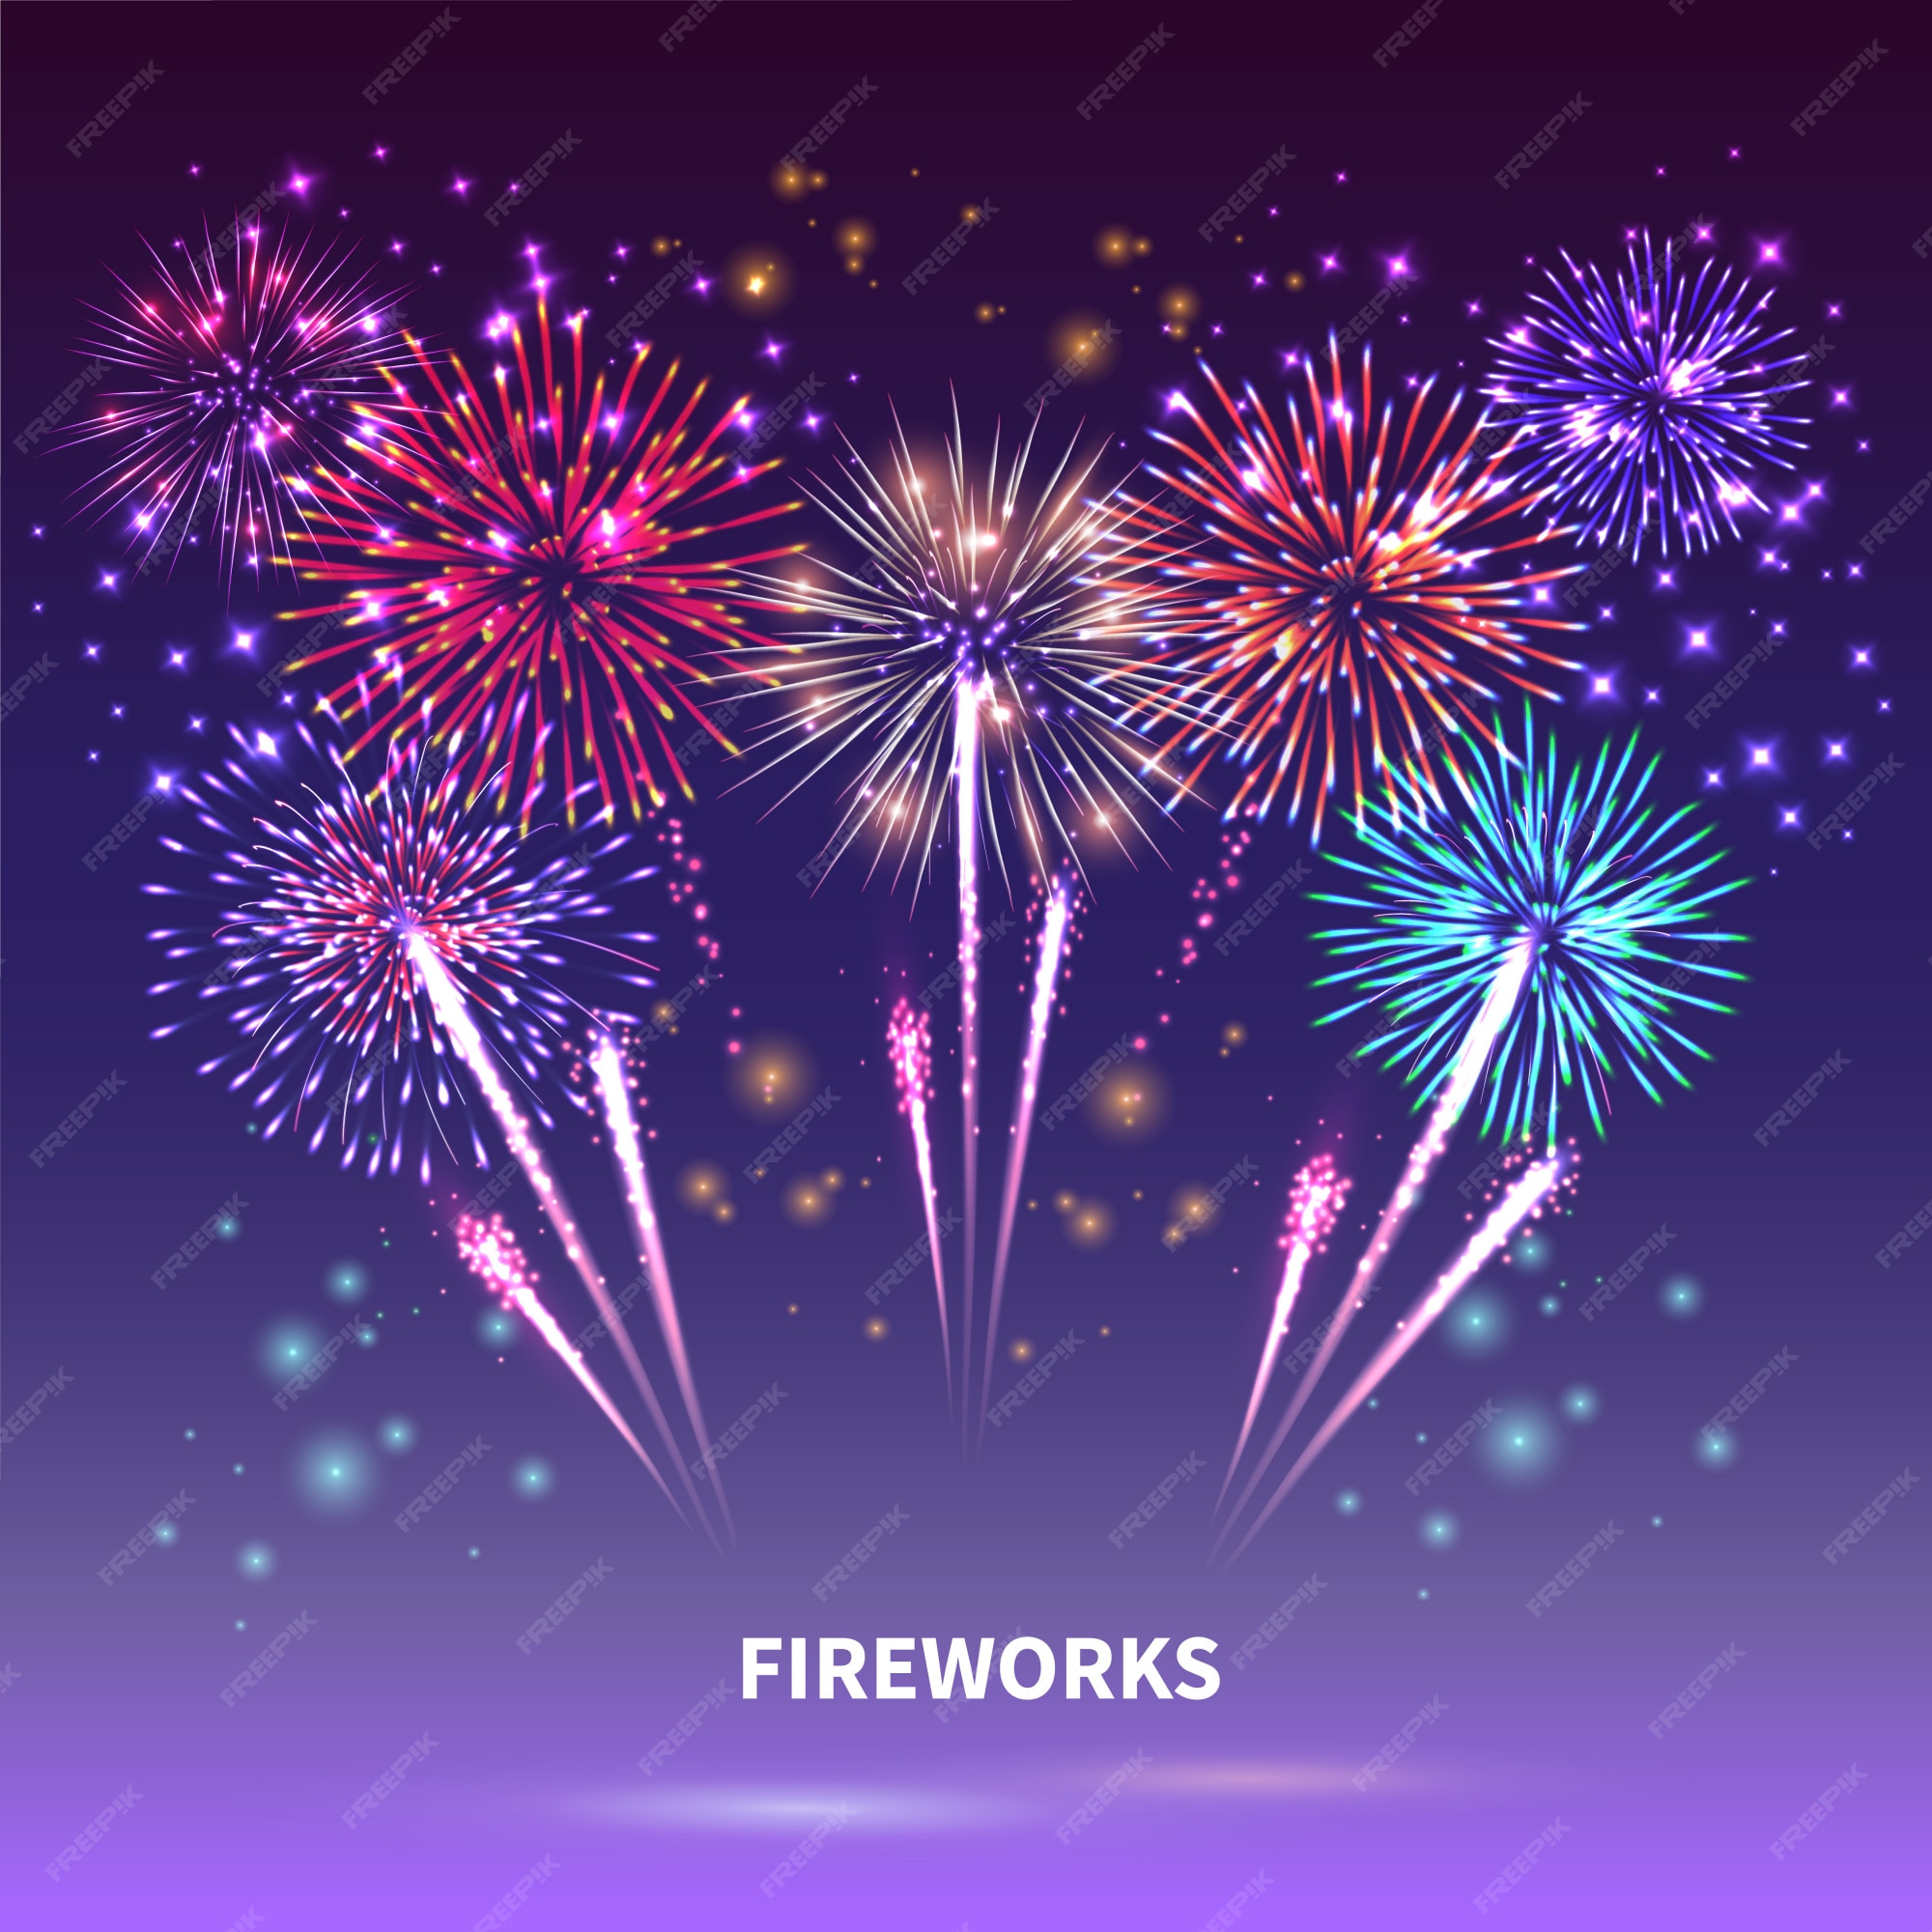 Fireworks Images - Free Download on Freepik